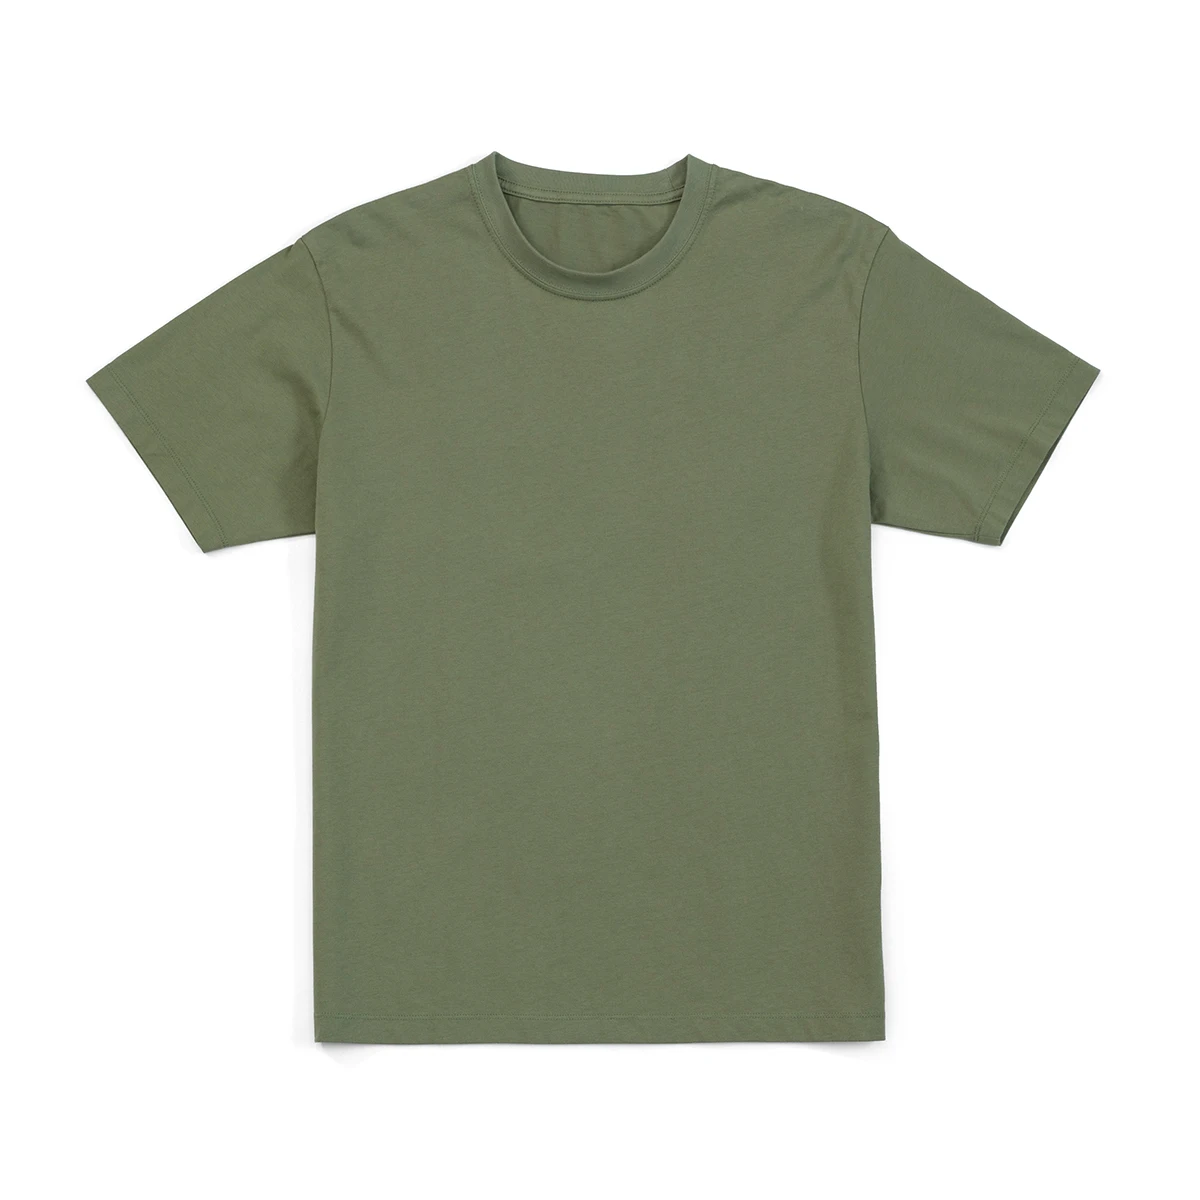 

Plain t-shirt unisex wholesale blank 100% cotton men t shirt top tee apparel OEM/ODM 200GSM Dropshipping, Customizable